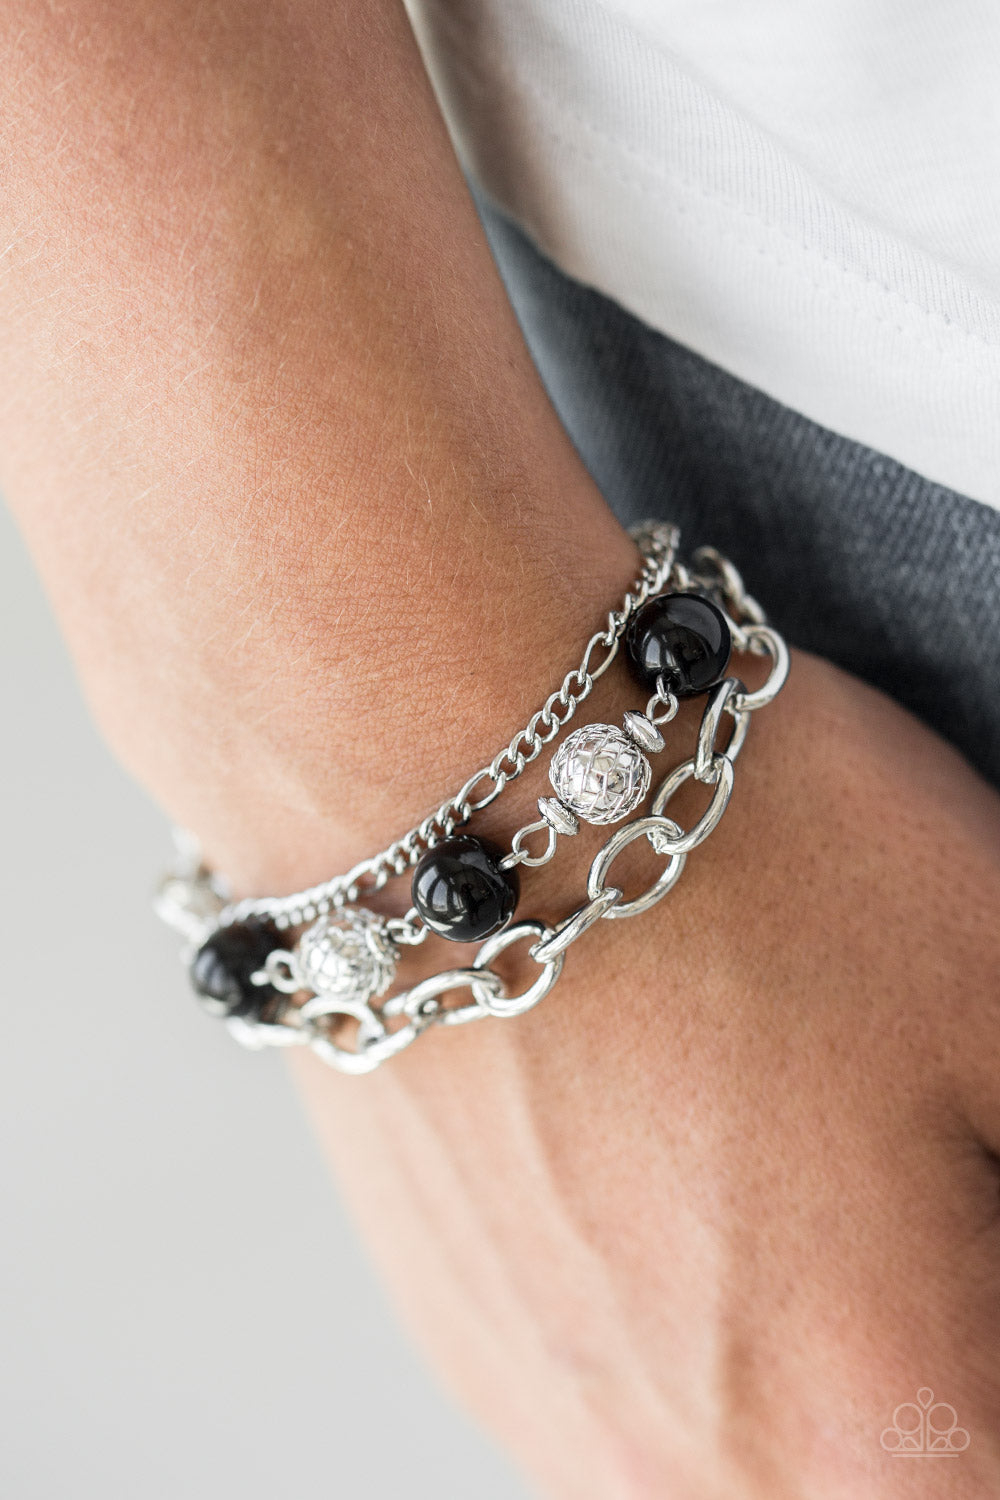 Paparazzi Vintage Variety - Black Beads - Silver Bracelet - $5 Jewelry With Ashley Swint